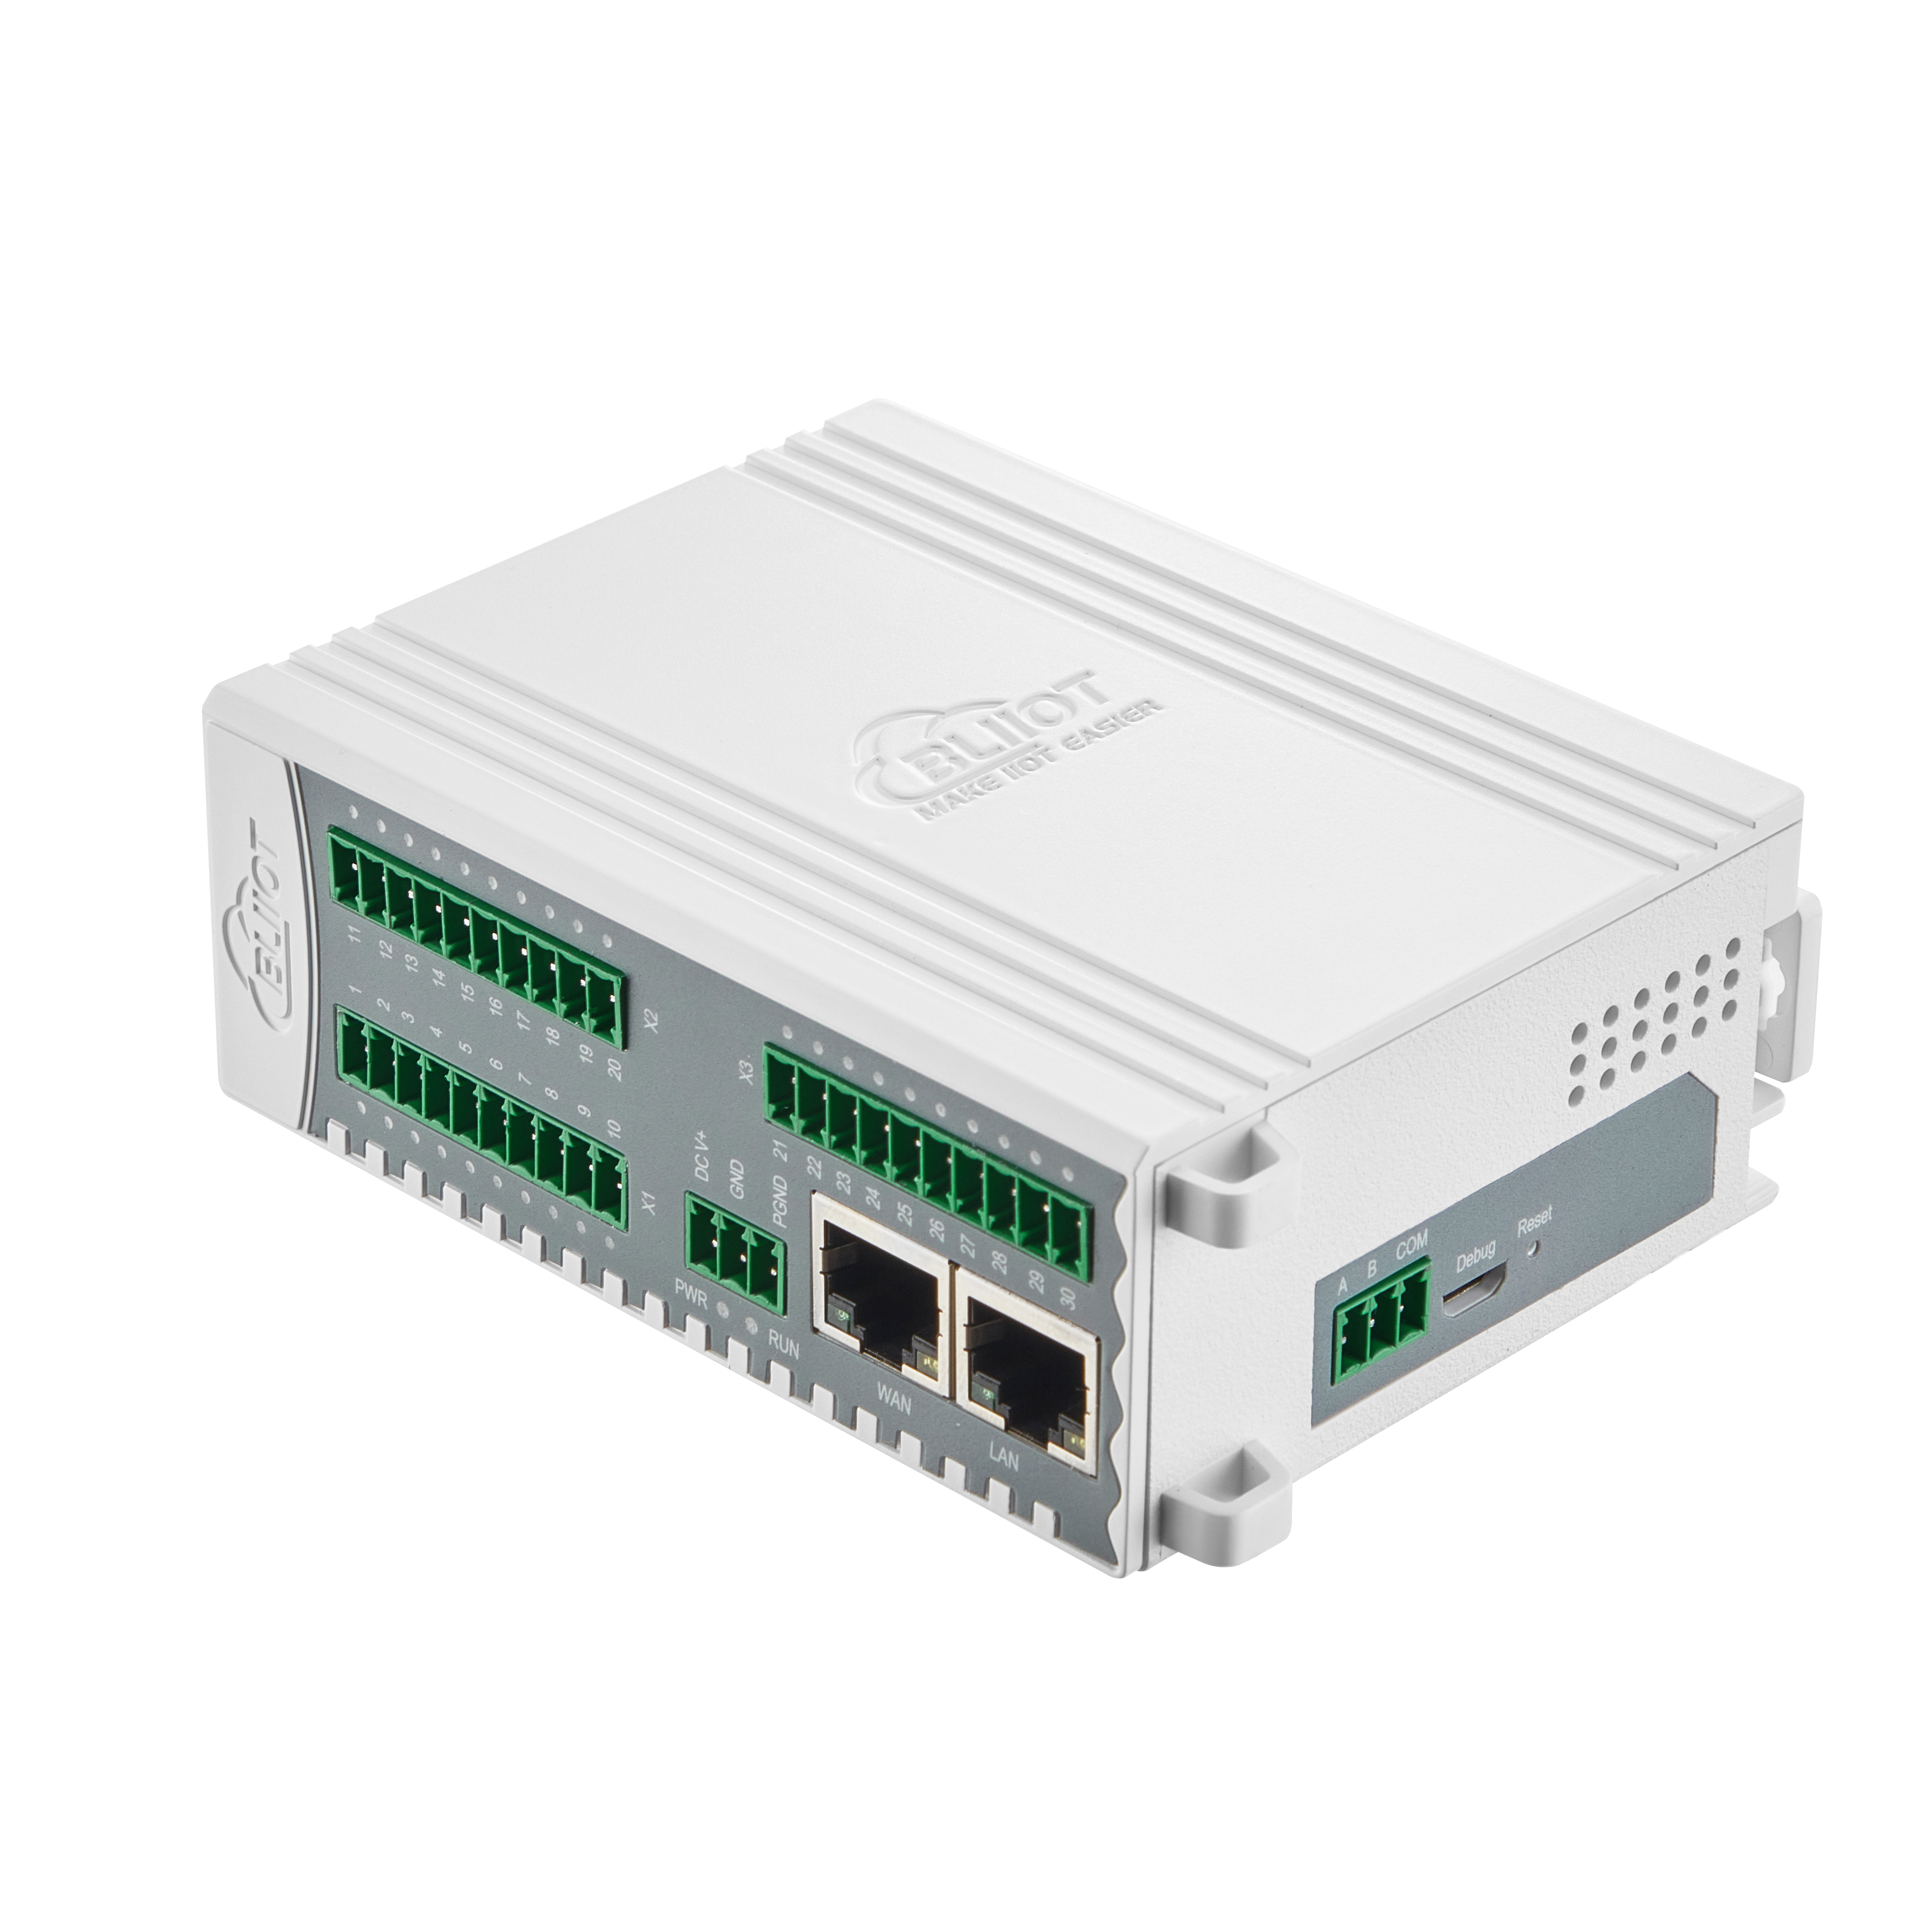  Dynamic environment monitoring Ethernet SNMP IO Module